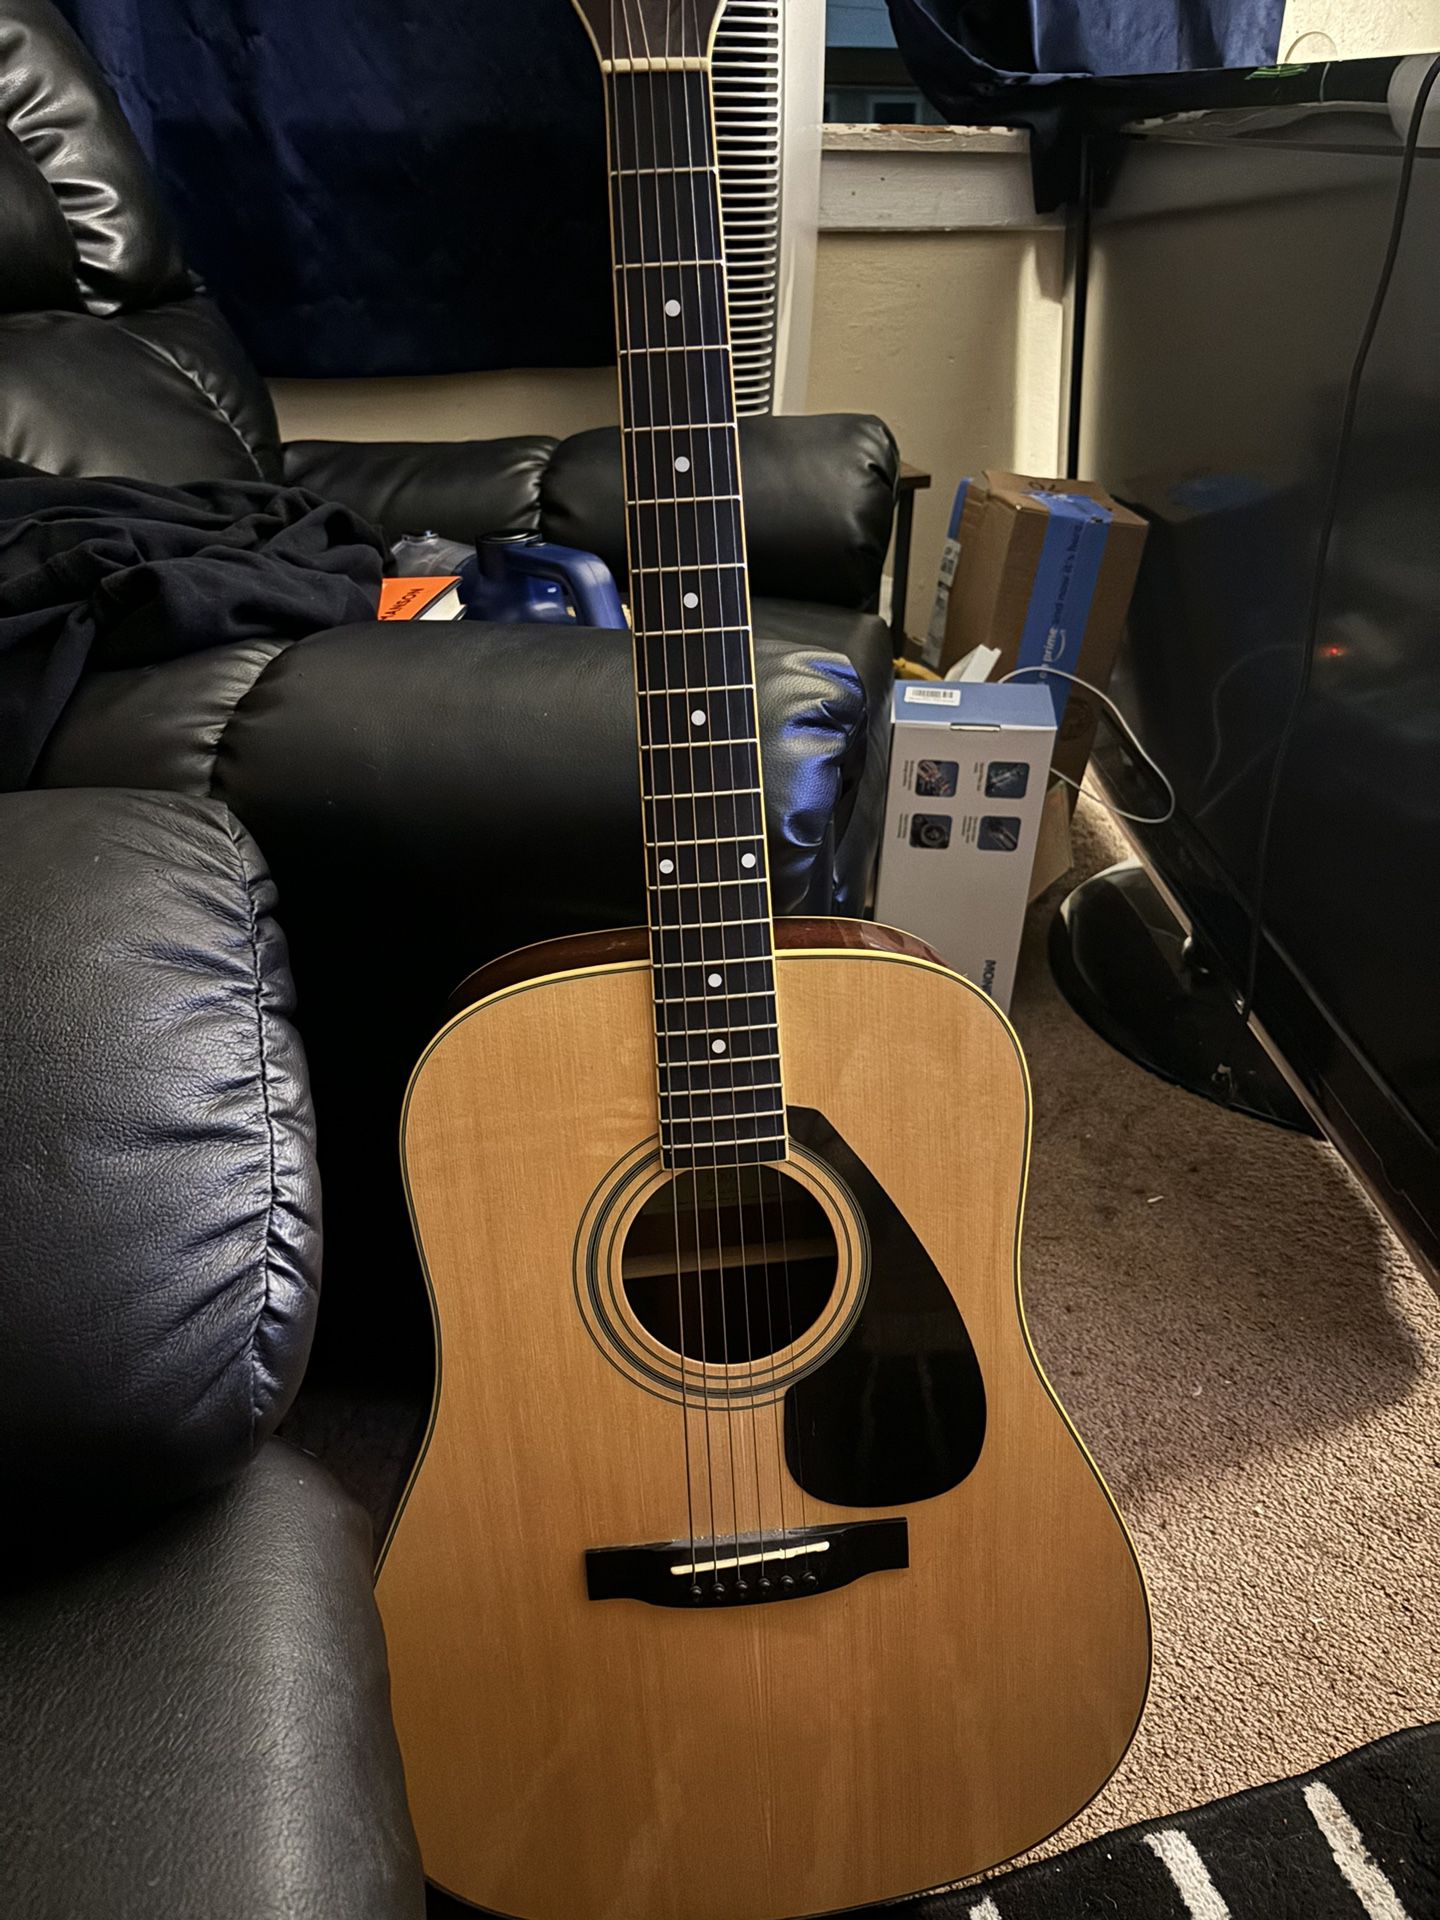 Yamaha FD02 Acoustic Guitar